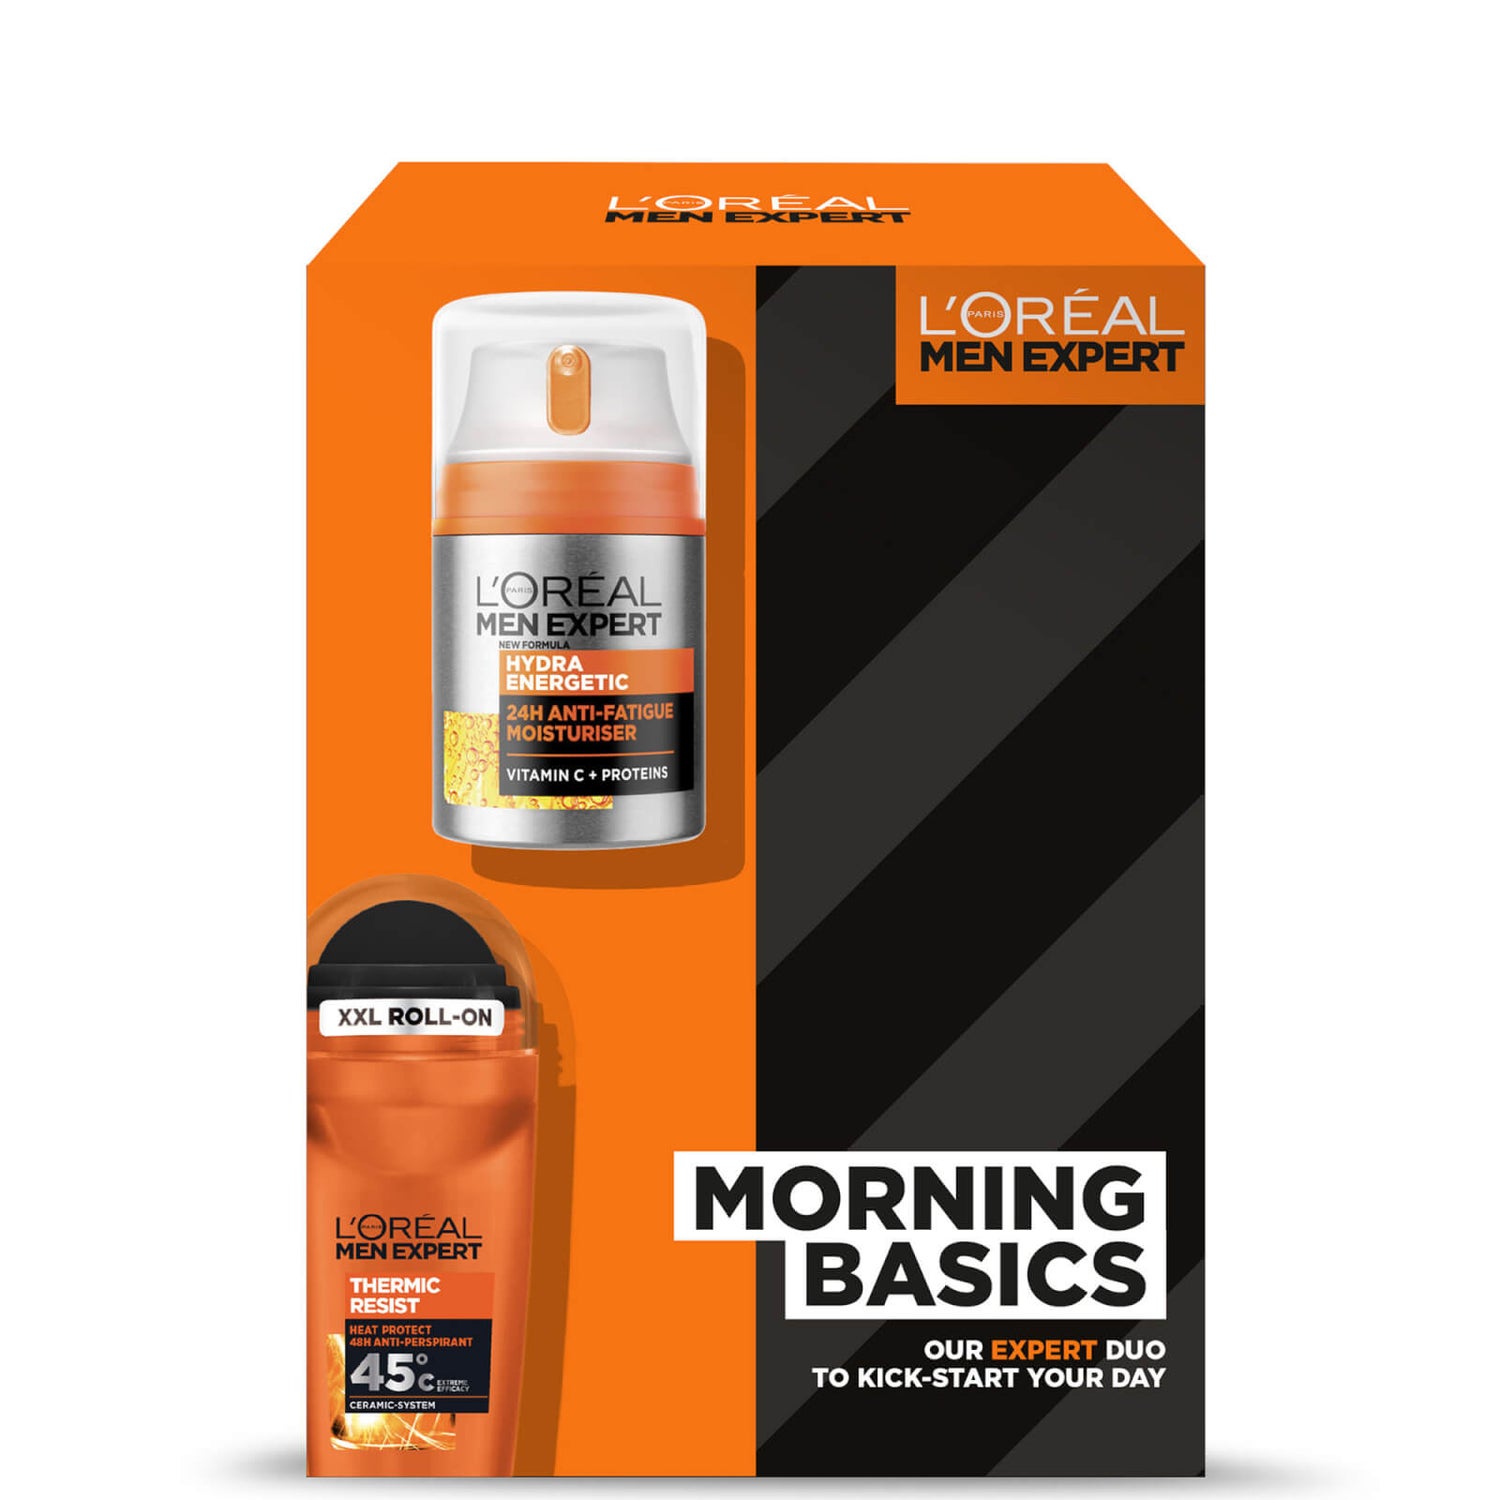 L'Oreal Paris Men Expert Morning Gift Basics Set for Him